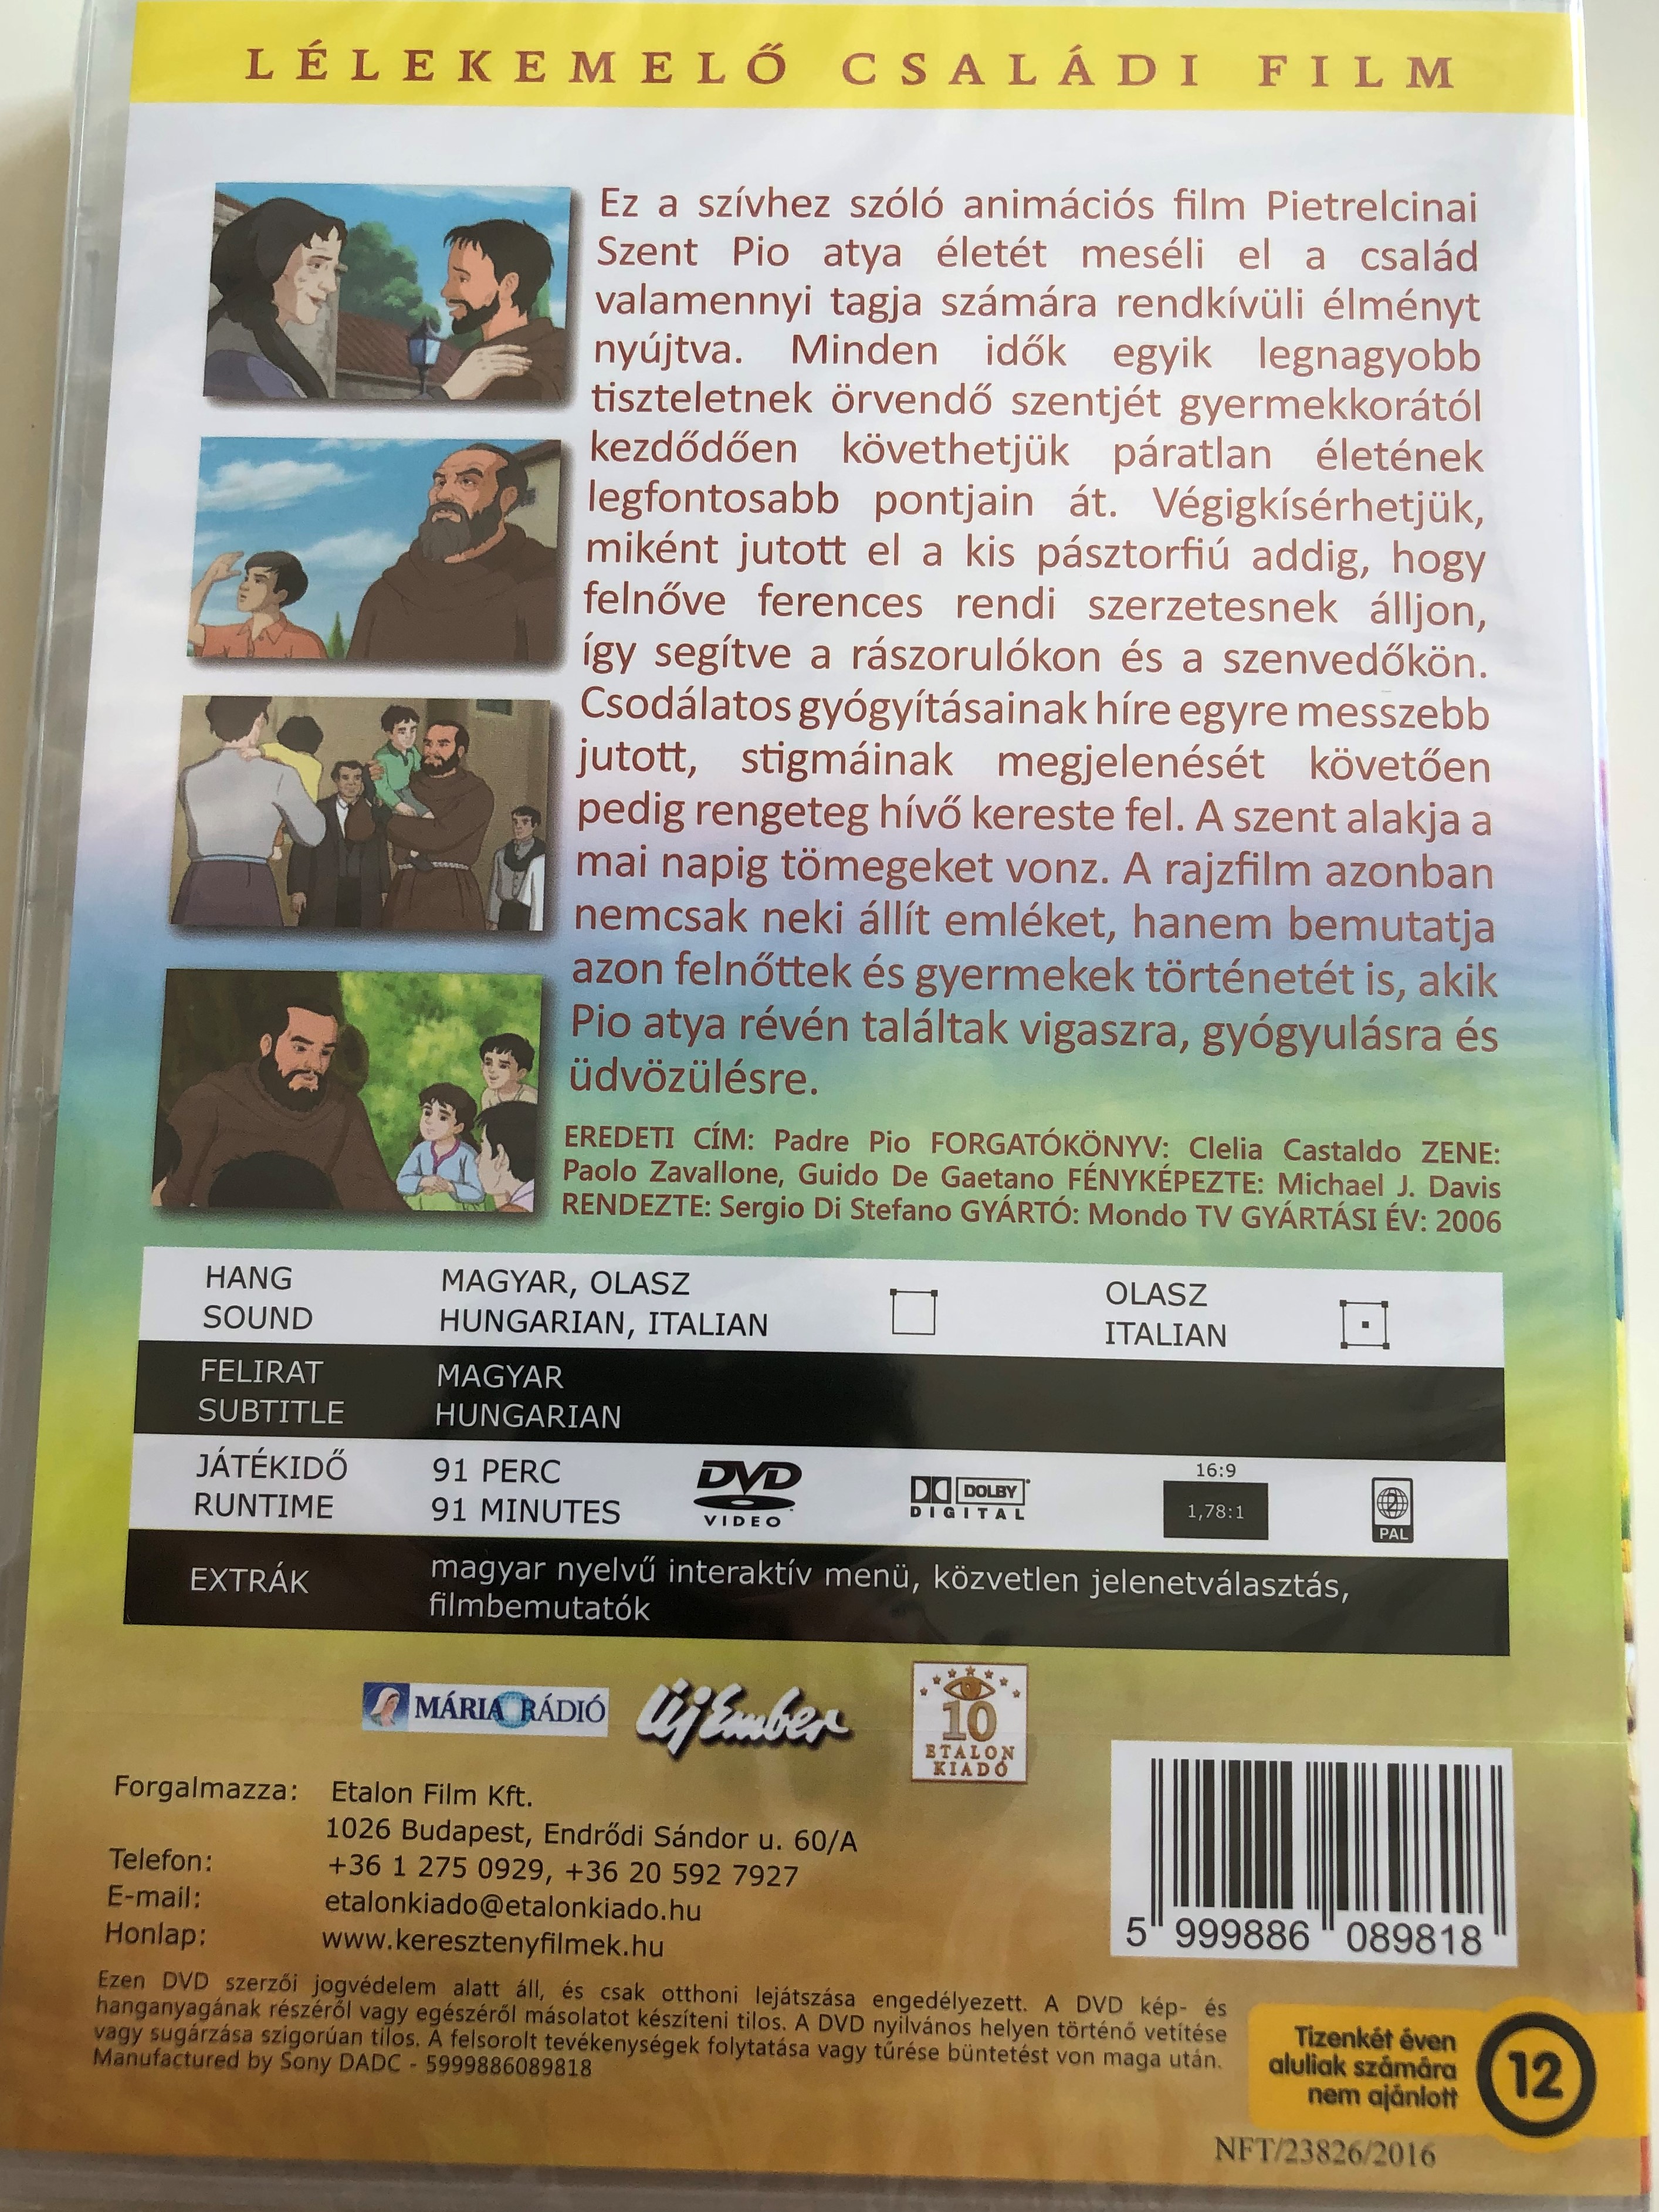 padre-pio-dvd-2006-pio-atya-directed-by-sergio-di-stefano-written-by-clelia-castaldo-paolo-zavallone-guido-de-gaetano-a-hit-ri-sai-rajzfilmsorozat-v.-etalon-film-2-.jpg